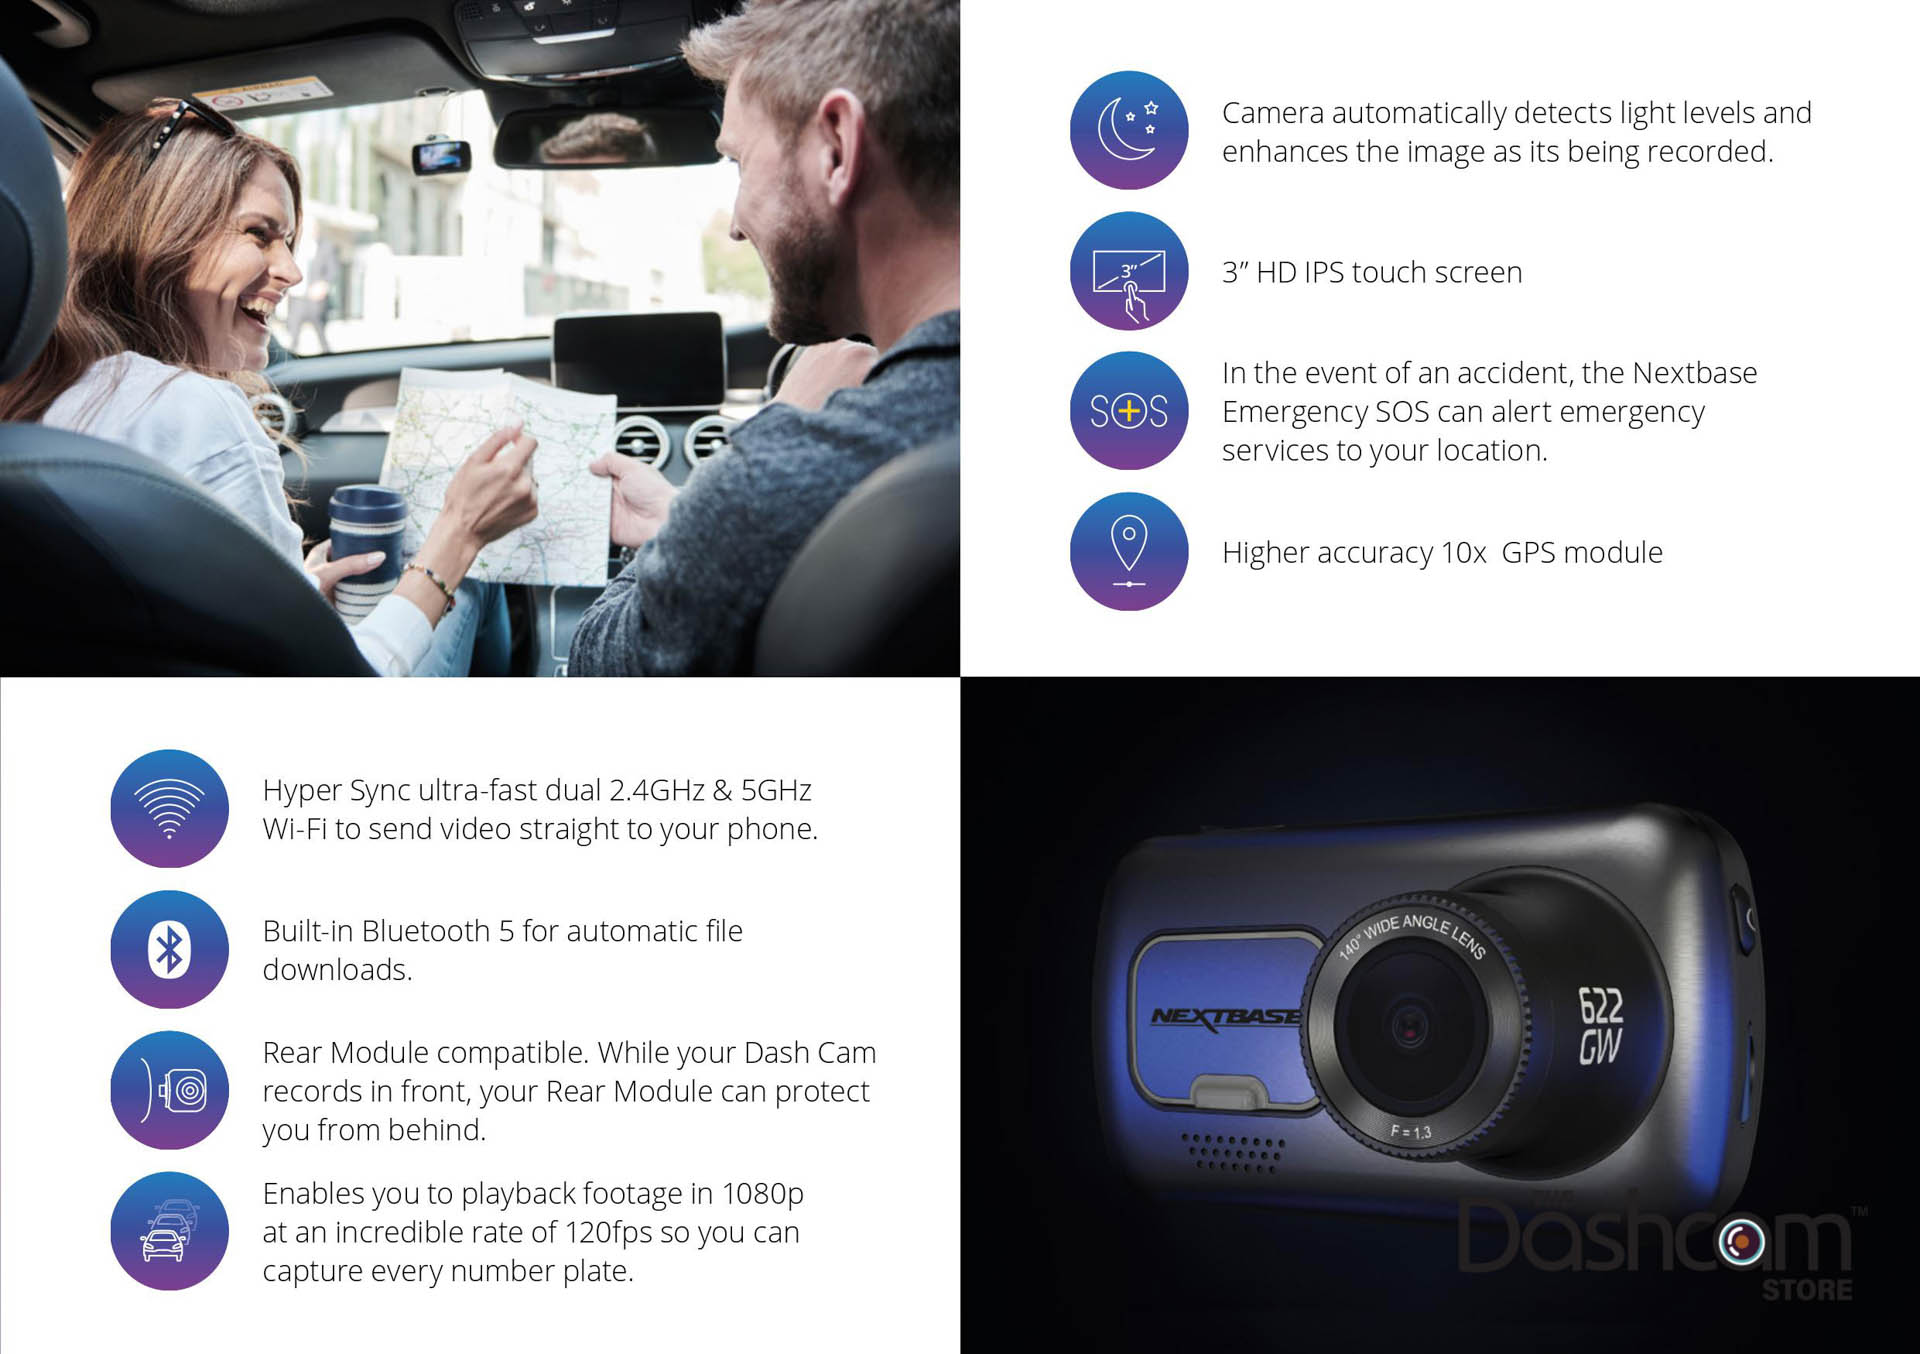 Nextbase Announces High Performance 622GW Dash Cam Now Available